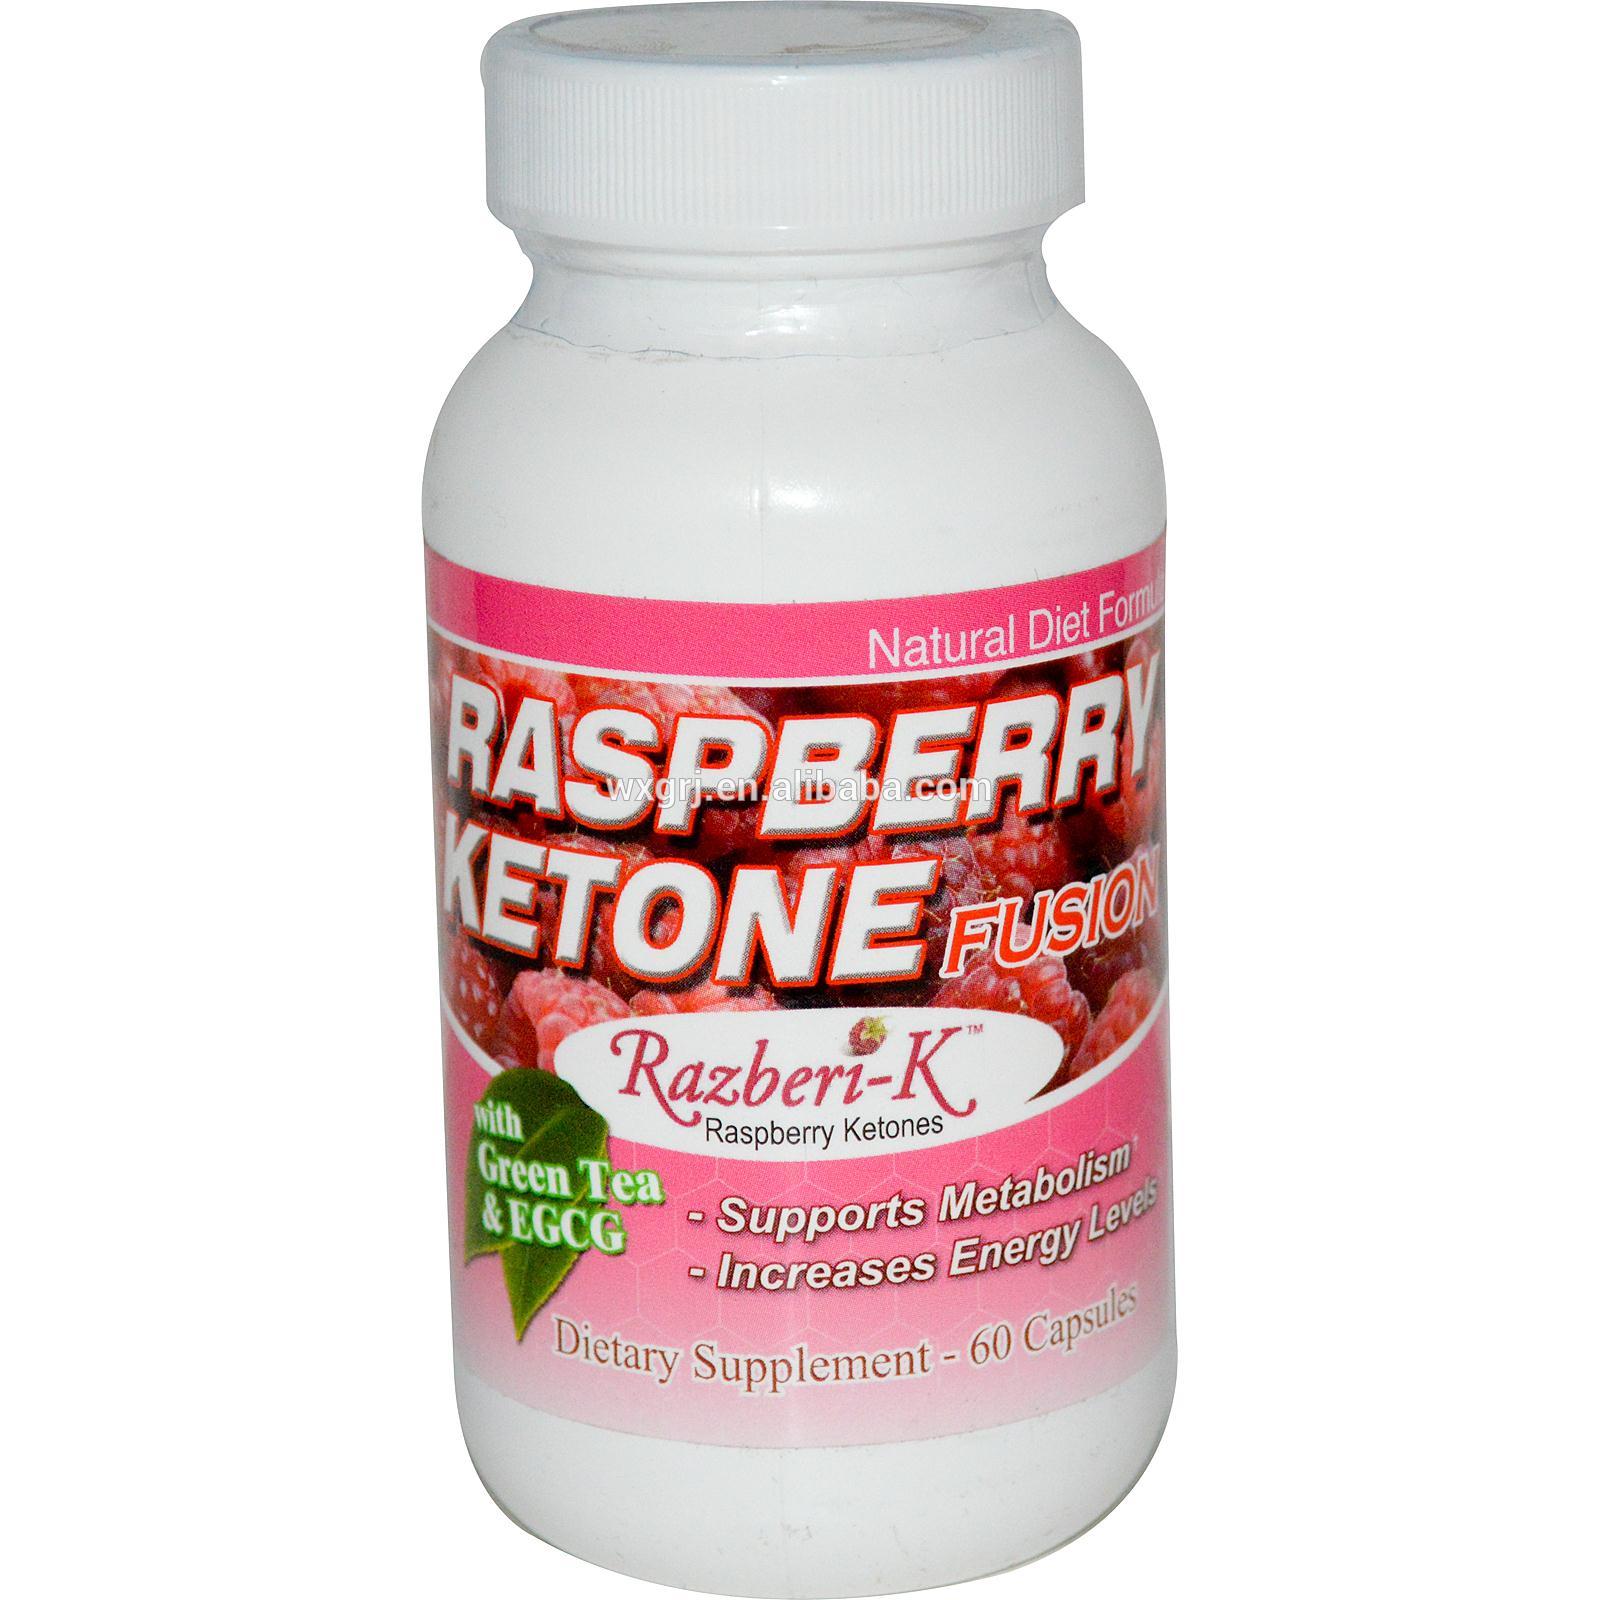 Raspberry Ketone capsules